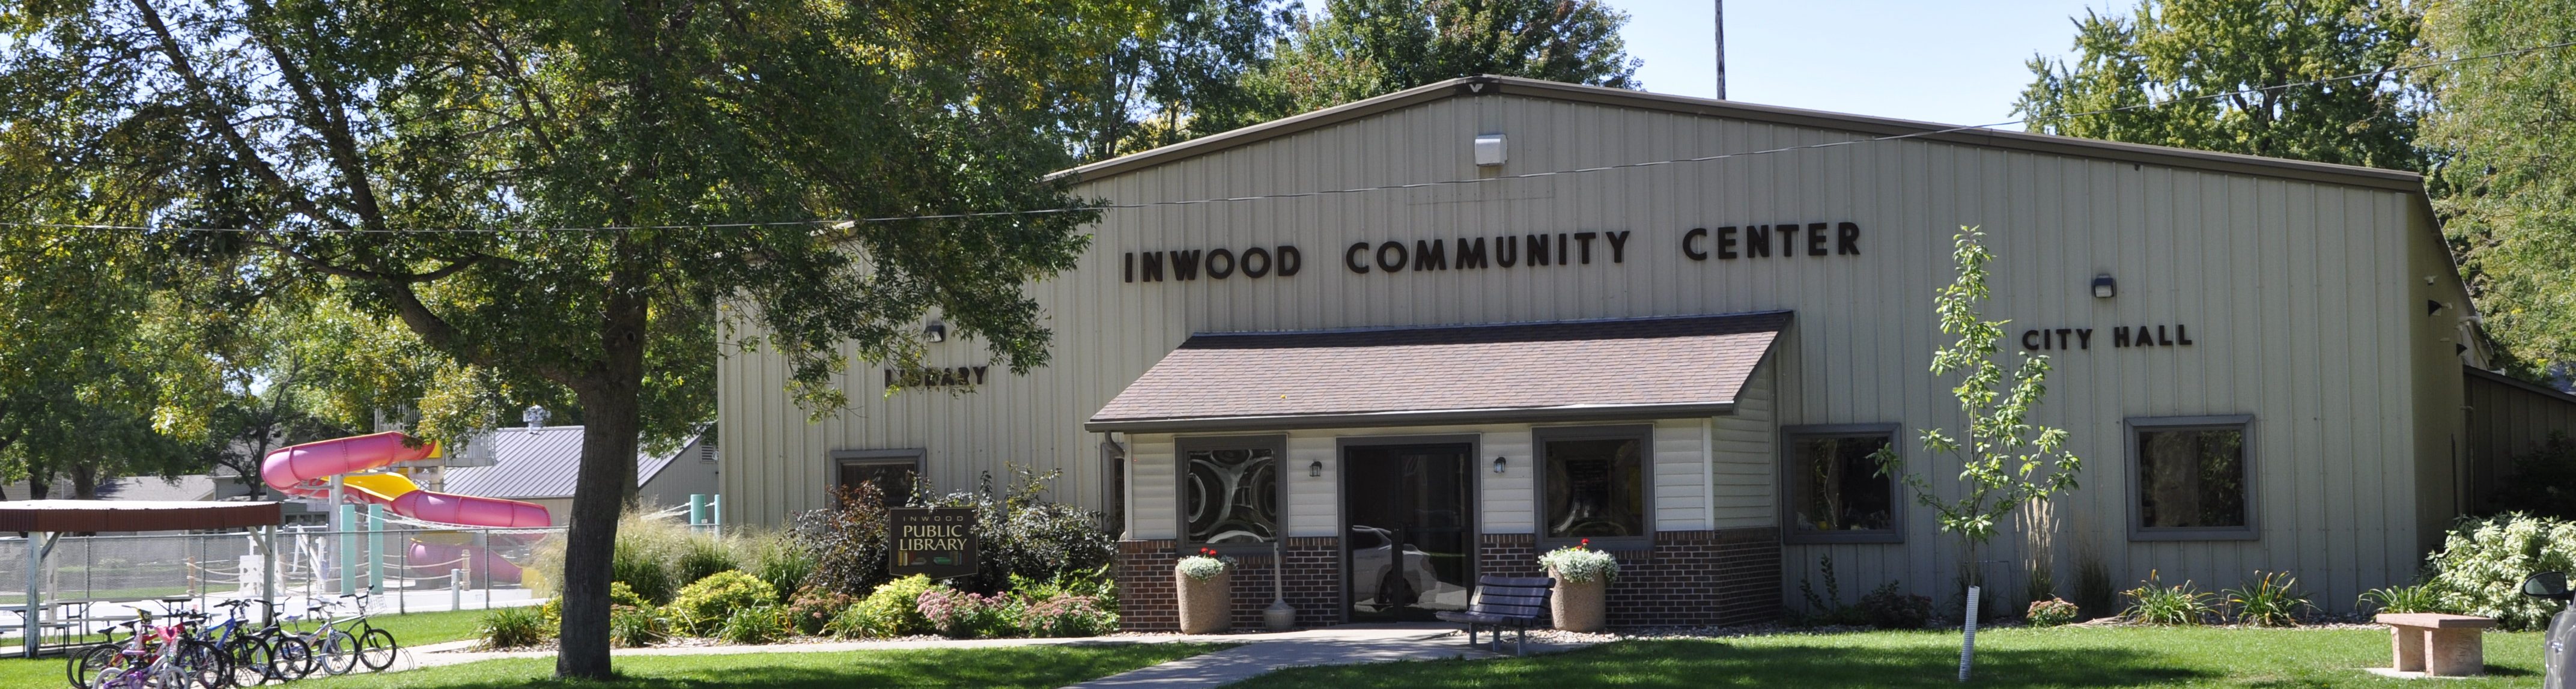 inwood community center